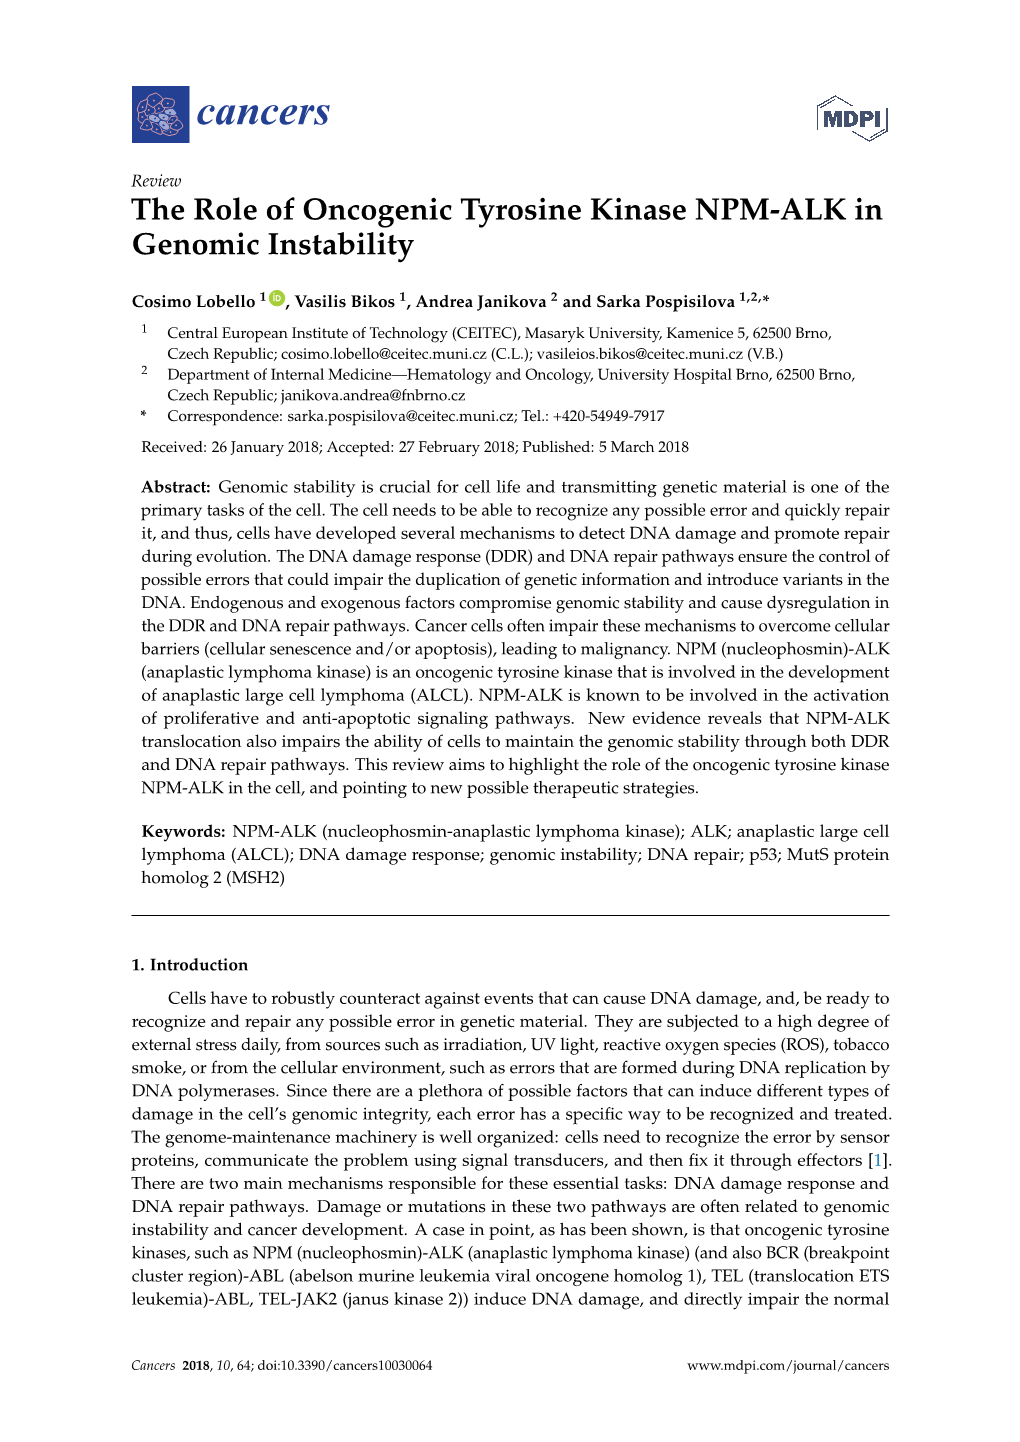 The Role of Oncogenic Tyrosine Kinase NPM-ALK in Genomic Instability